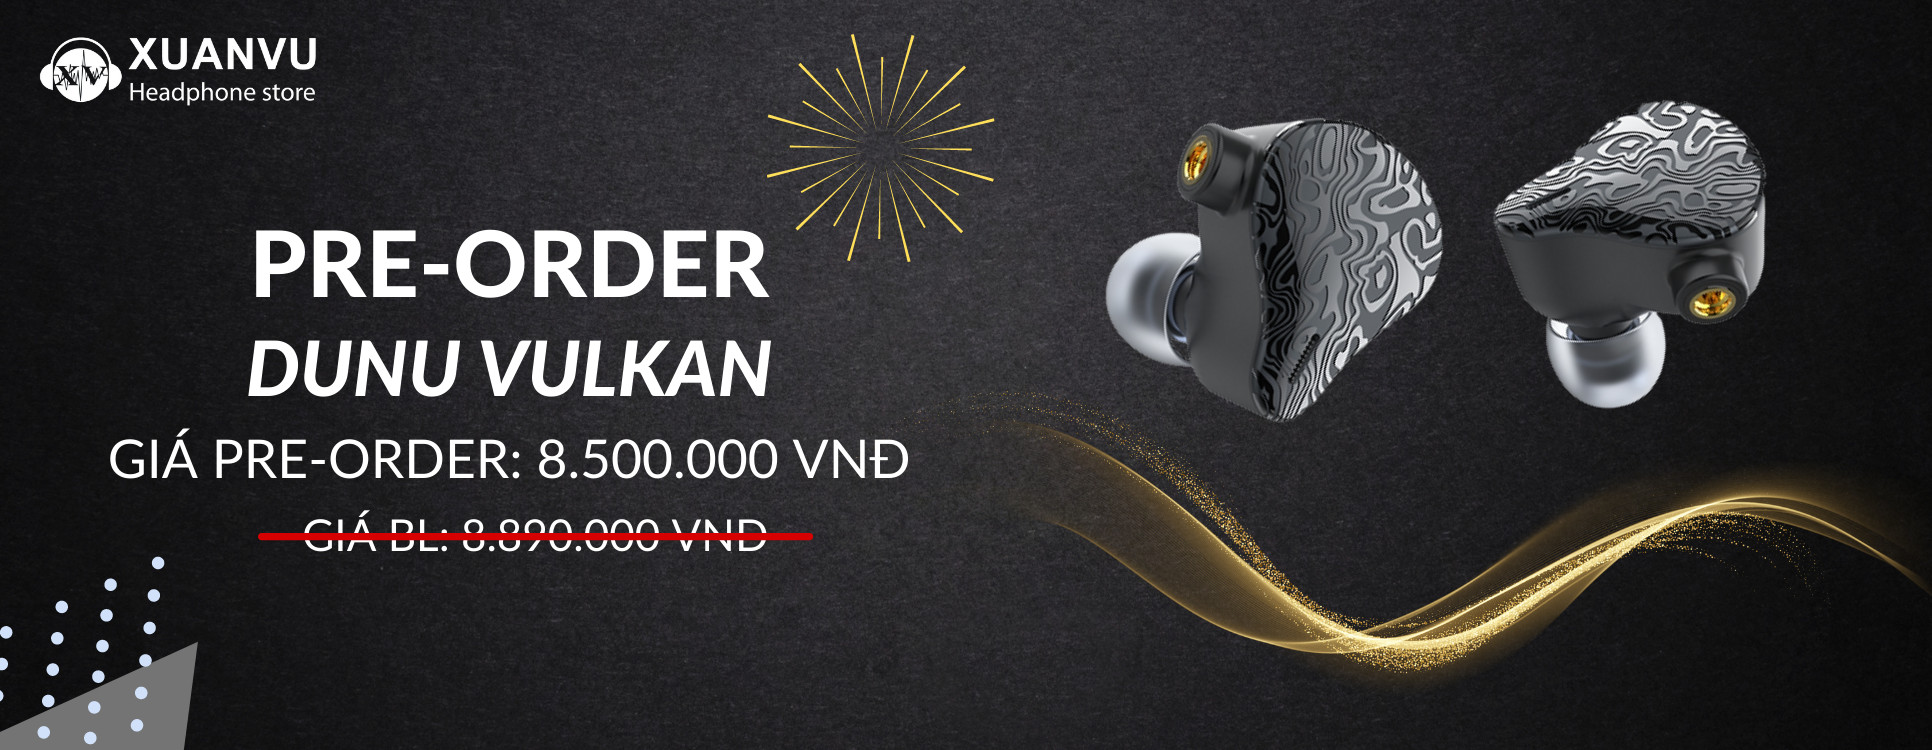 Pre-order tai nghe Dunu Vulkan DK-X6